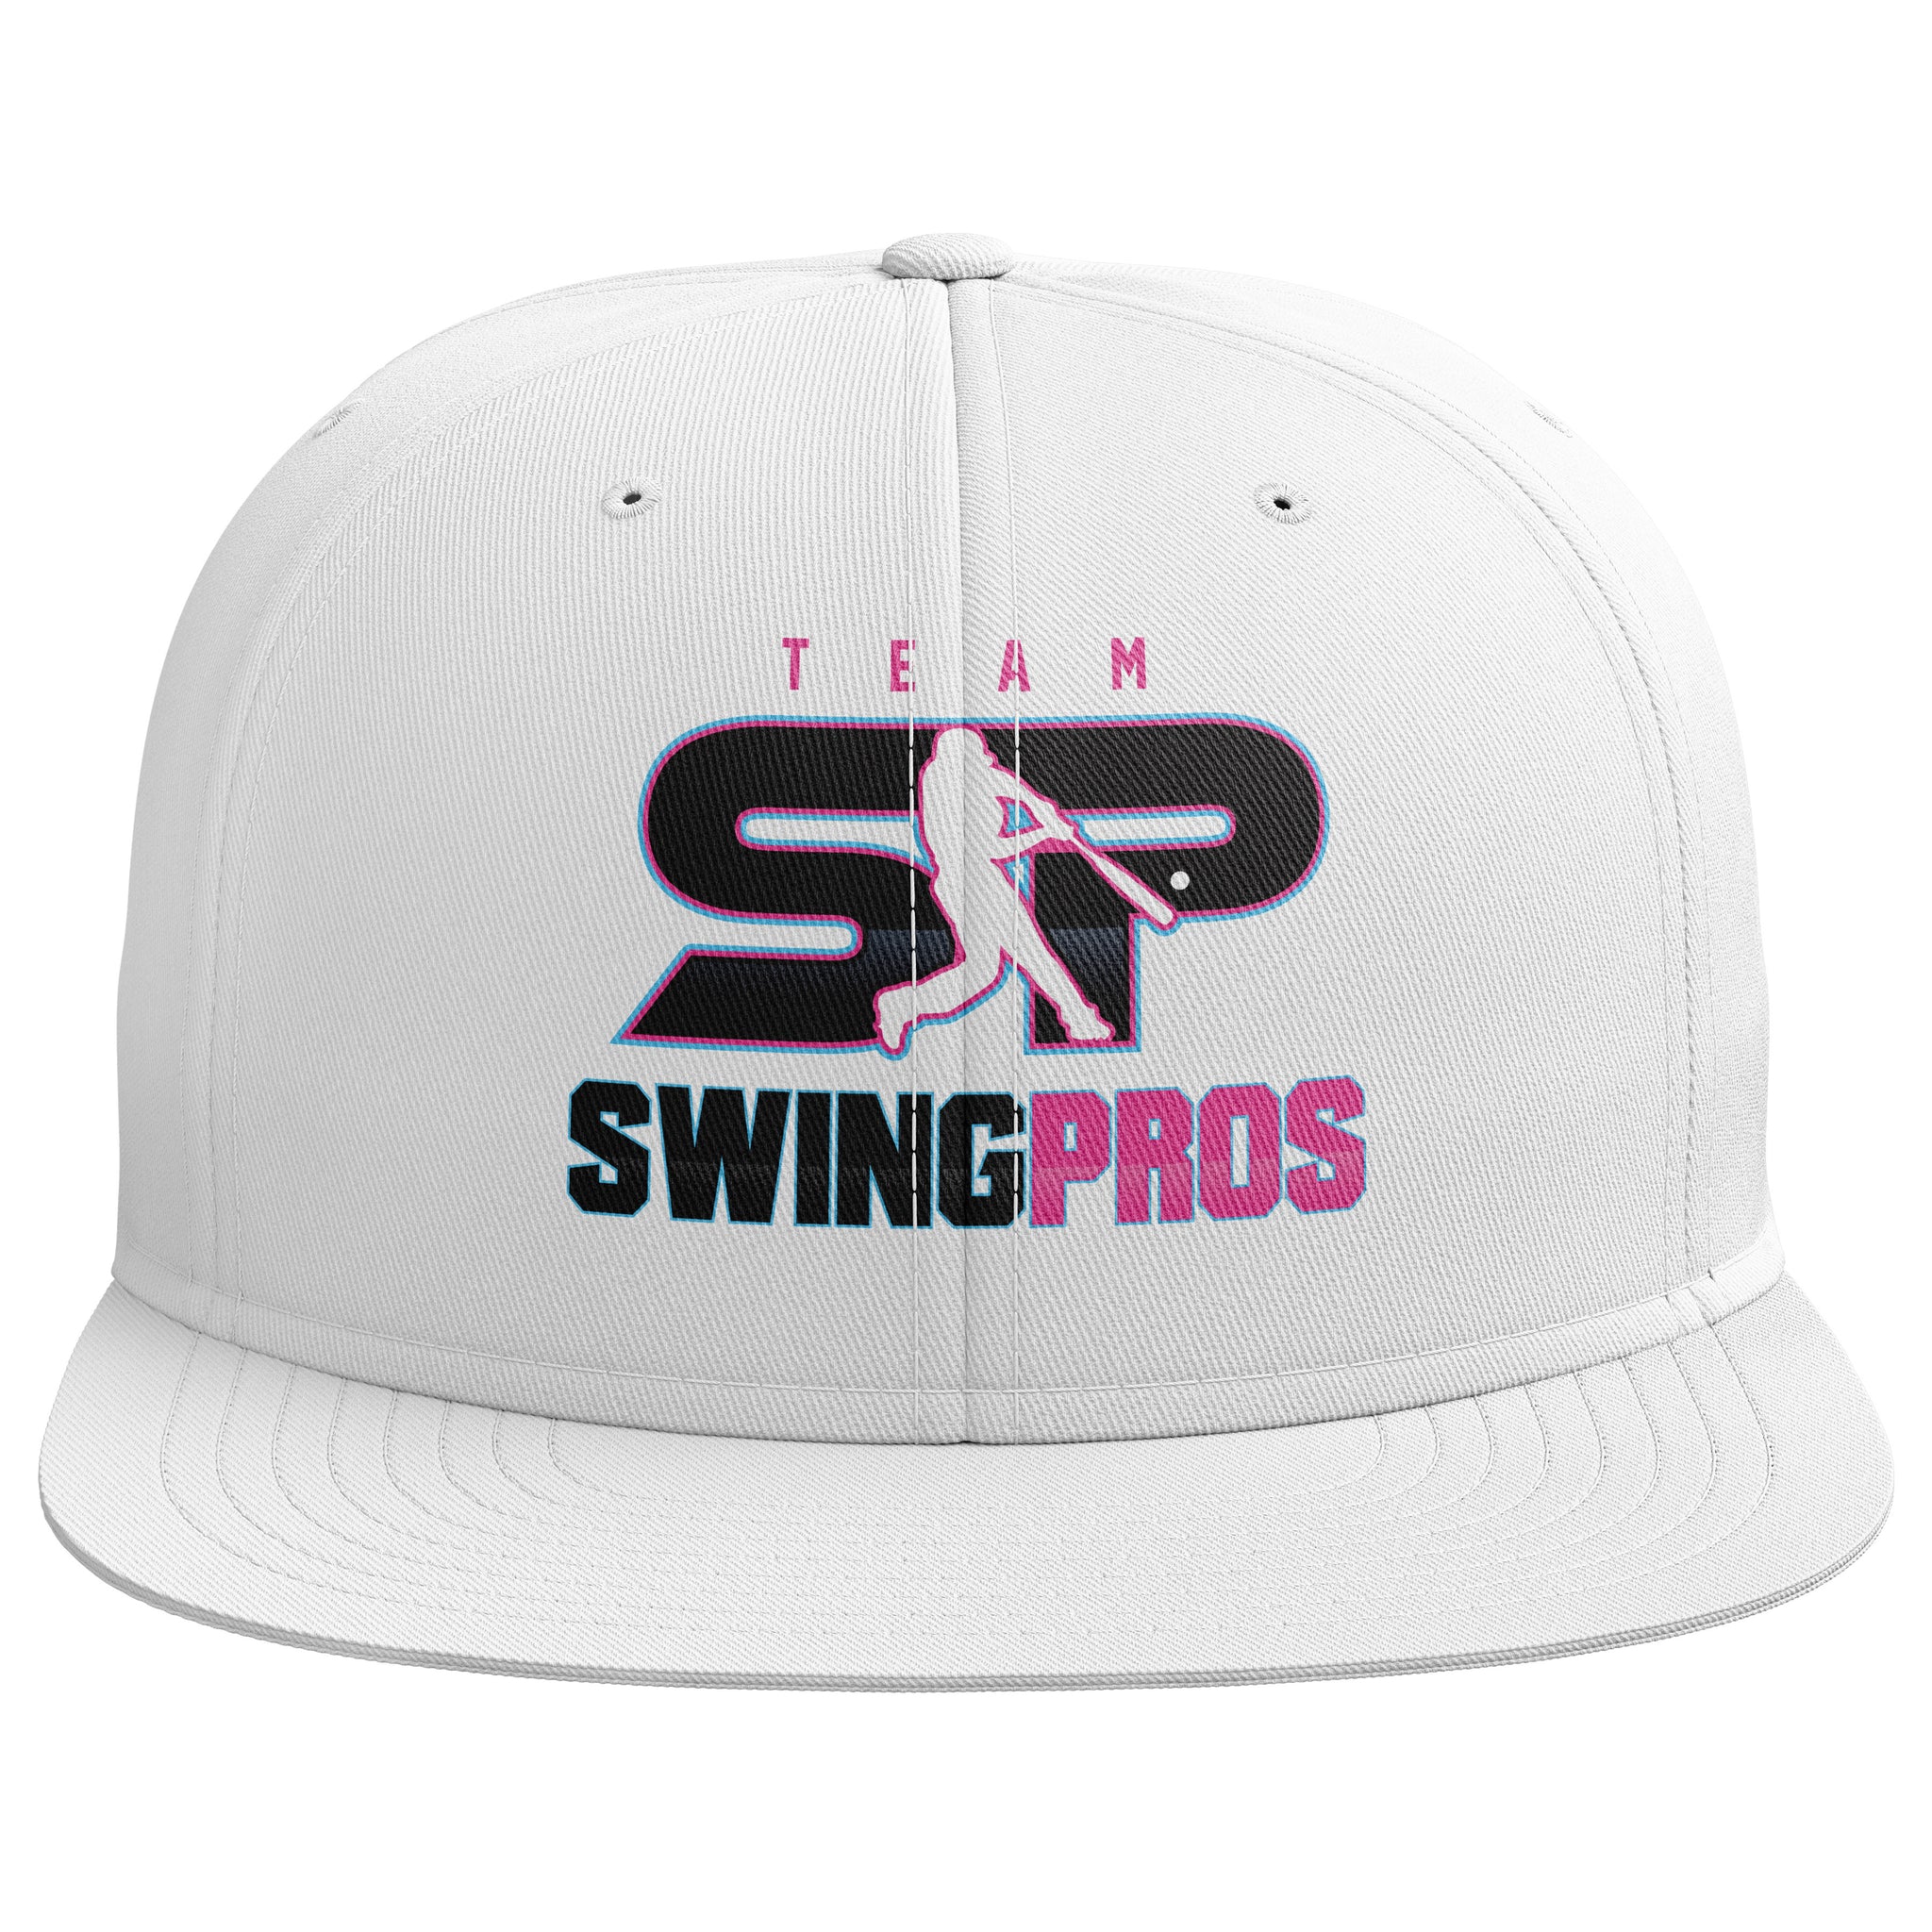 TEAM SWING PROS 1.0 PTS20 HAT